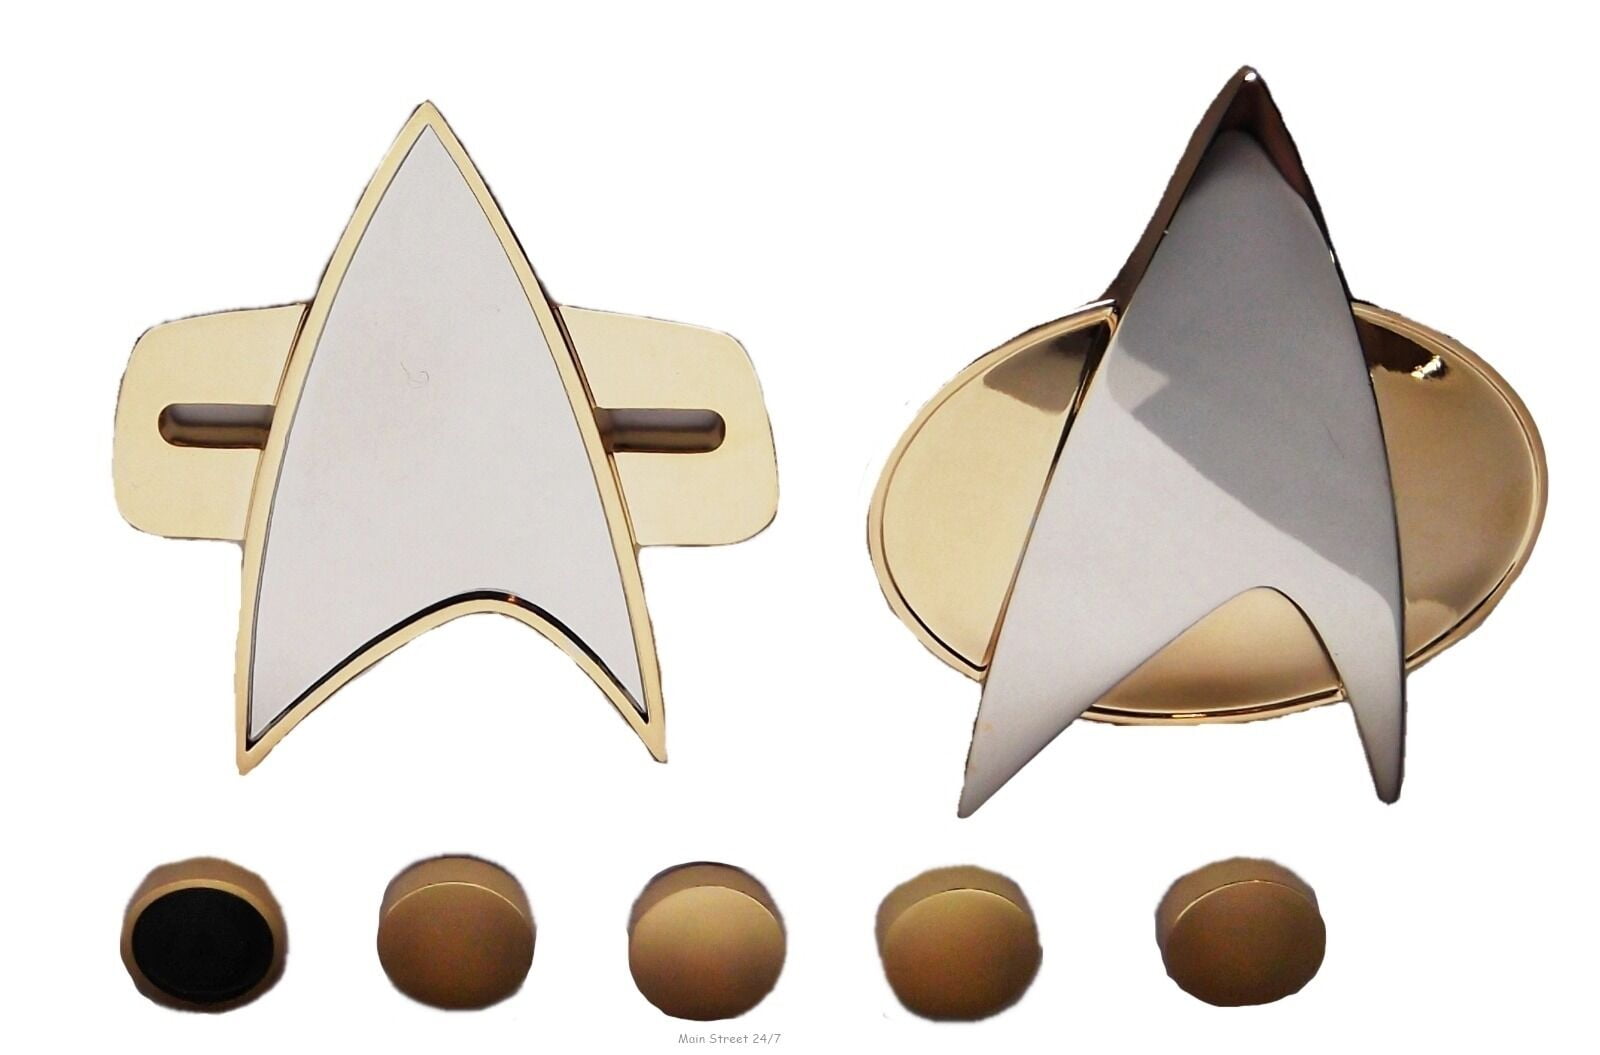 Star Trek Communicator Full Size Pins and Pip Set of 9 Pins 